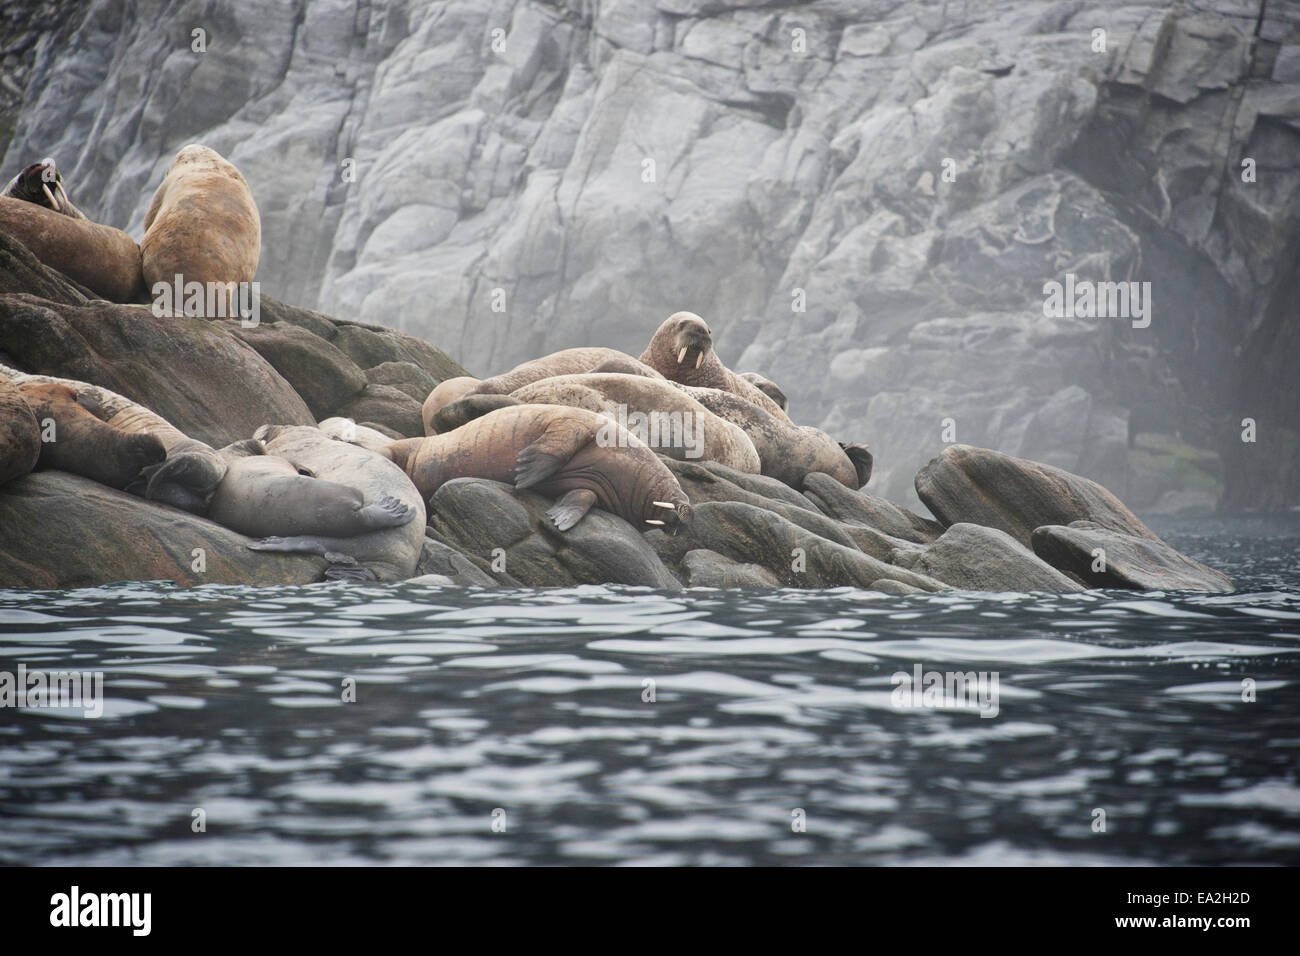 Walrus Colony, Odobenus rosmarus, hauled-out on rocks, Baffin Island, Canadian Arctic. Stock Photo